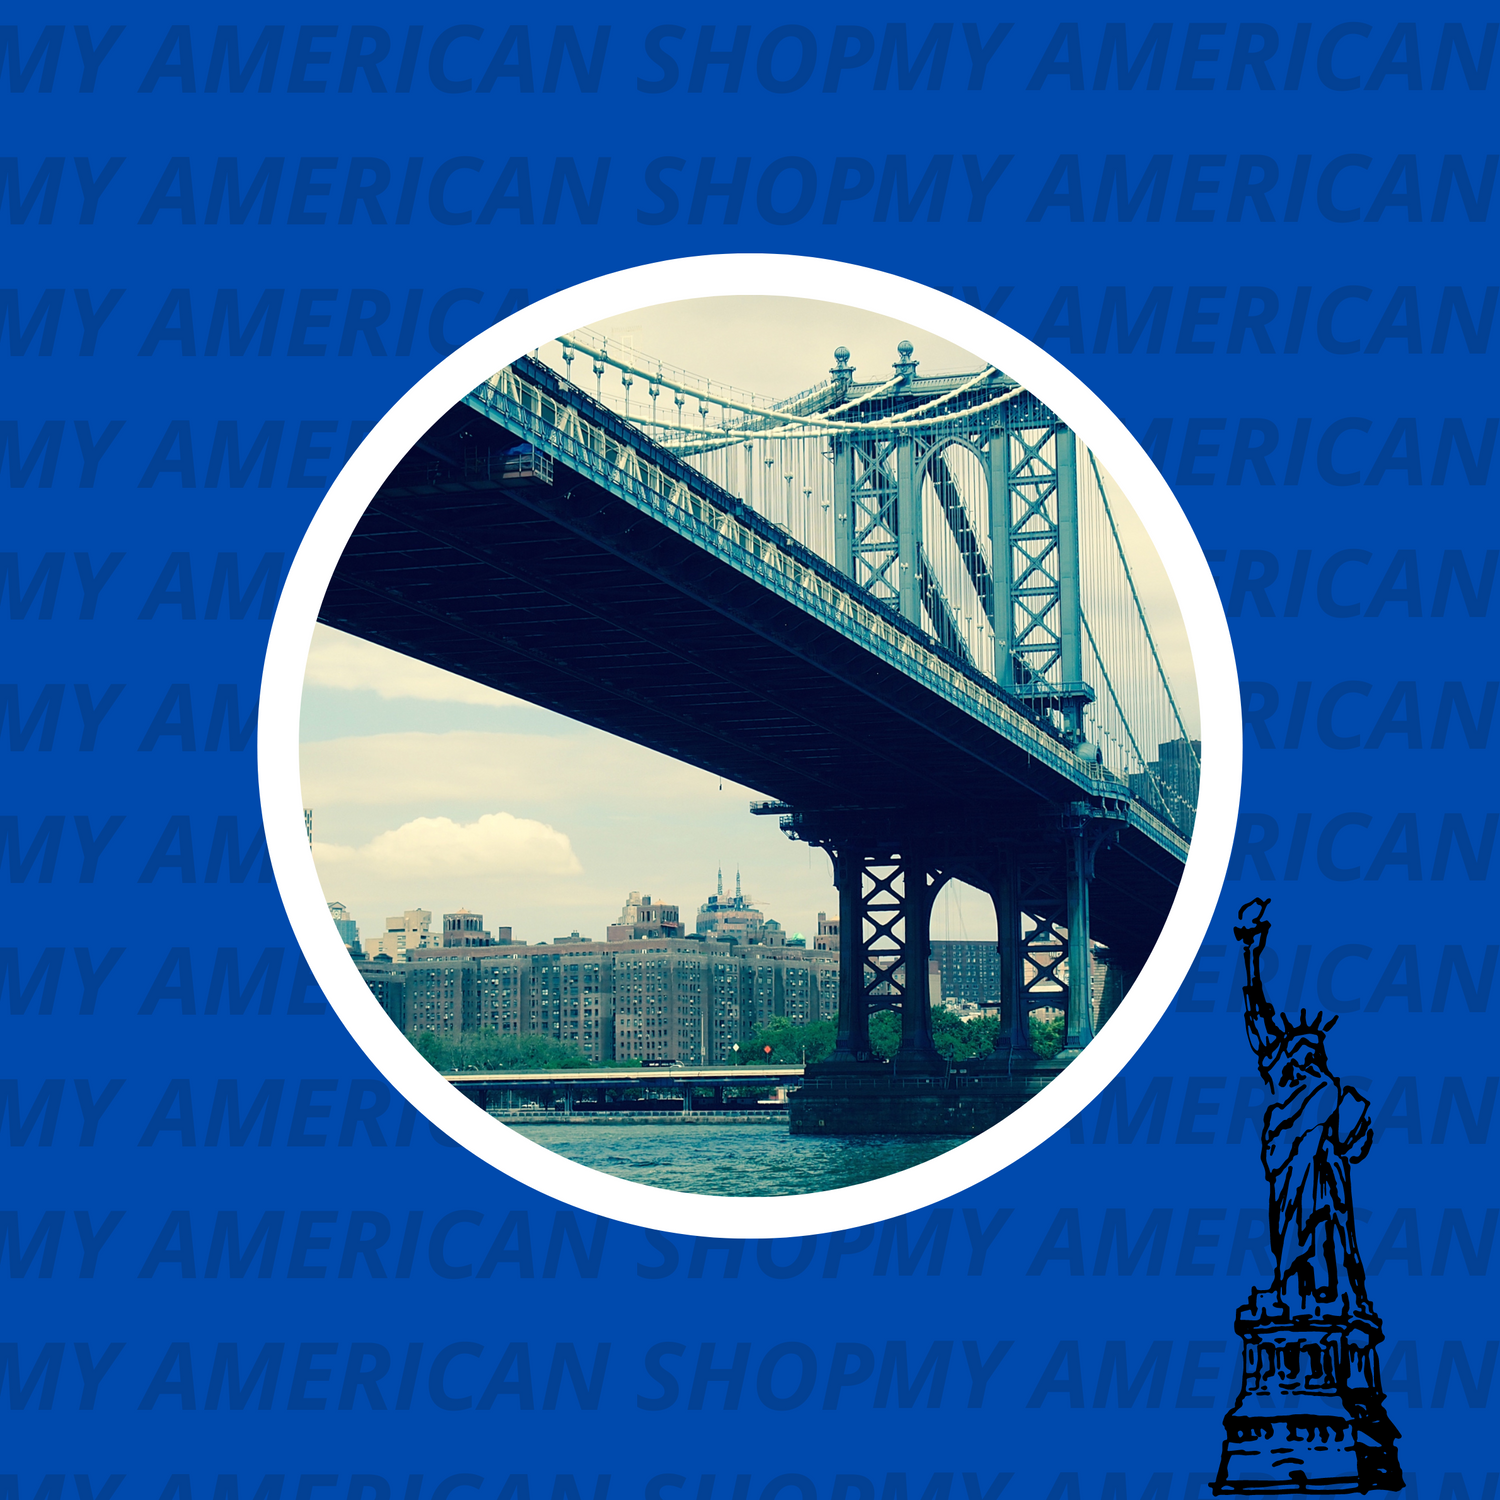 Explorez l'emblématique pont Manhattan de New York !